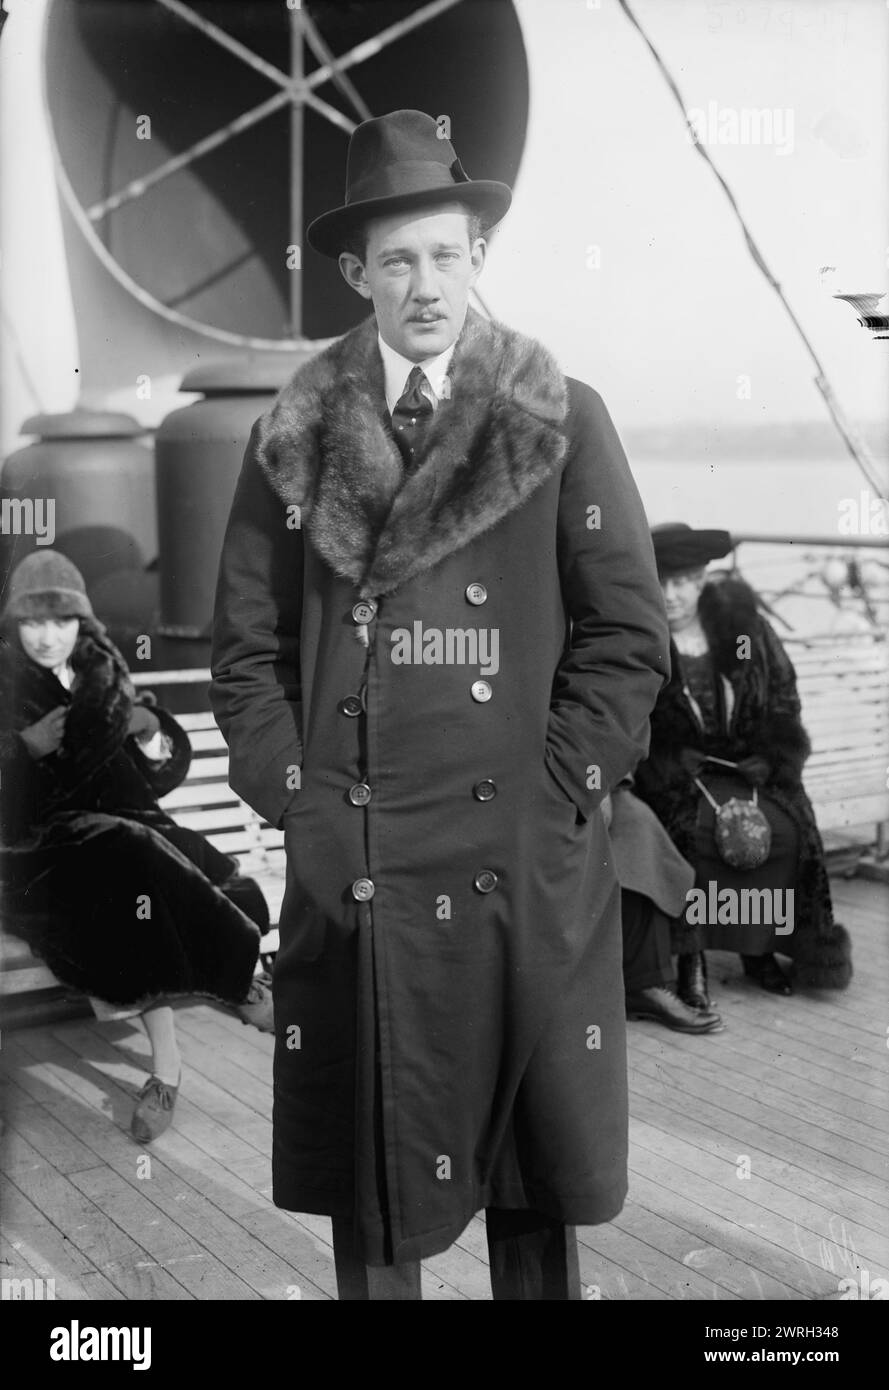 Prince Ruspoli, 1919. Shows Prince Eugenio Ruspoli, Secretary of the Italian Embassy, probably taken aboard the Mauretania at the Cunard pier in New York on November 25, 1919. Stock Photo